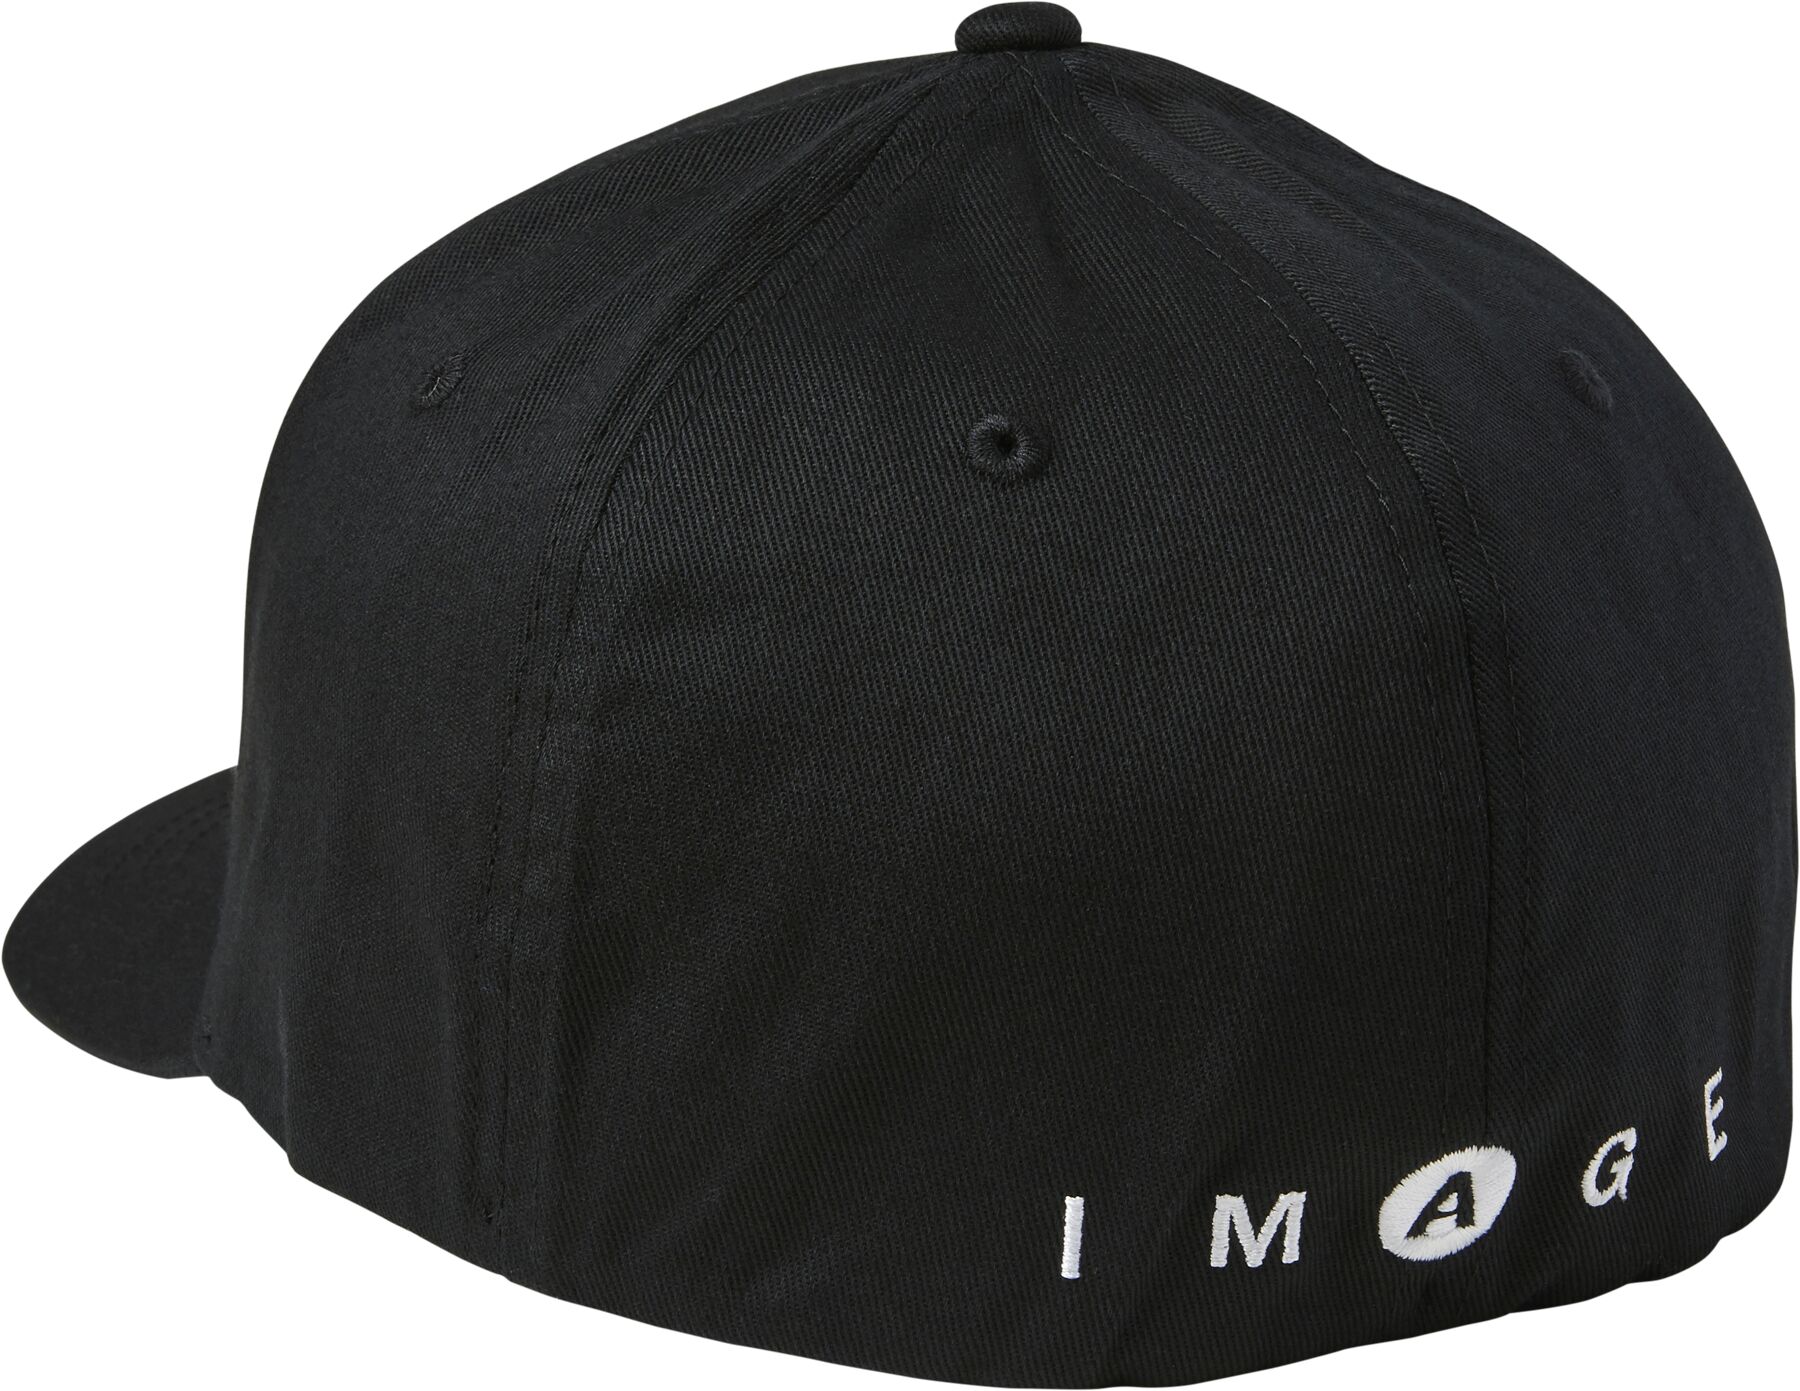 Men's Skarz Flexfit Hat